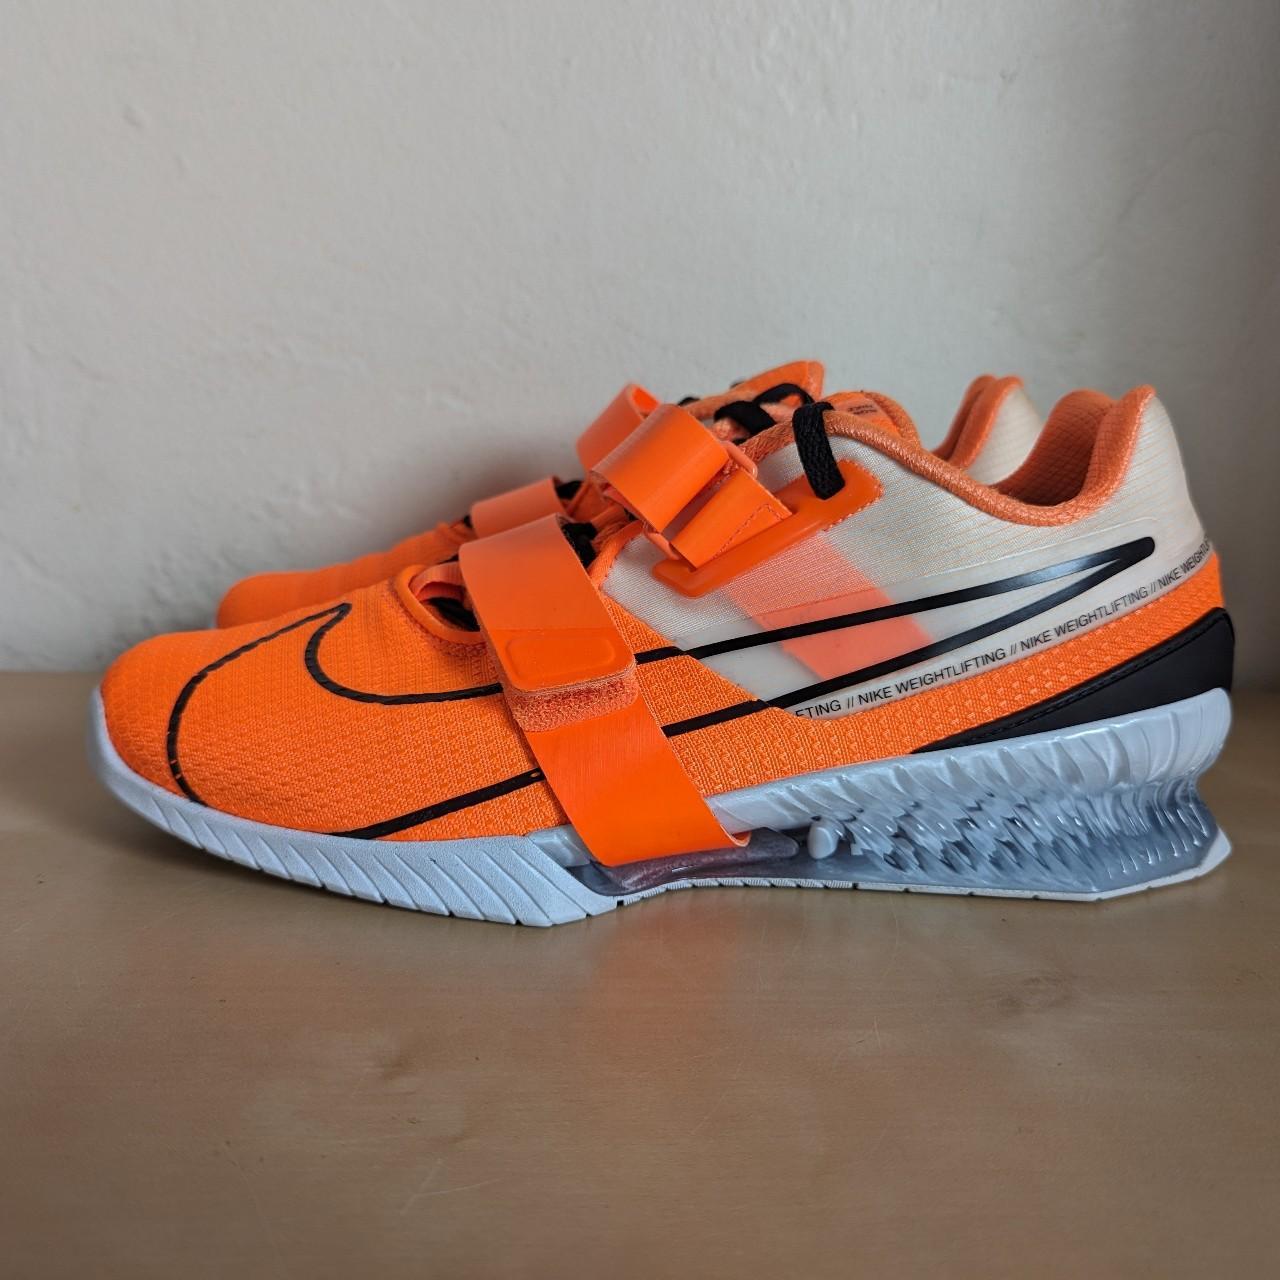 Nike Romaleos 4 Total Orange Black Lifting Shoes...